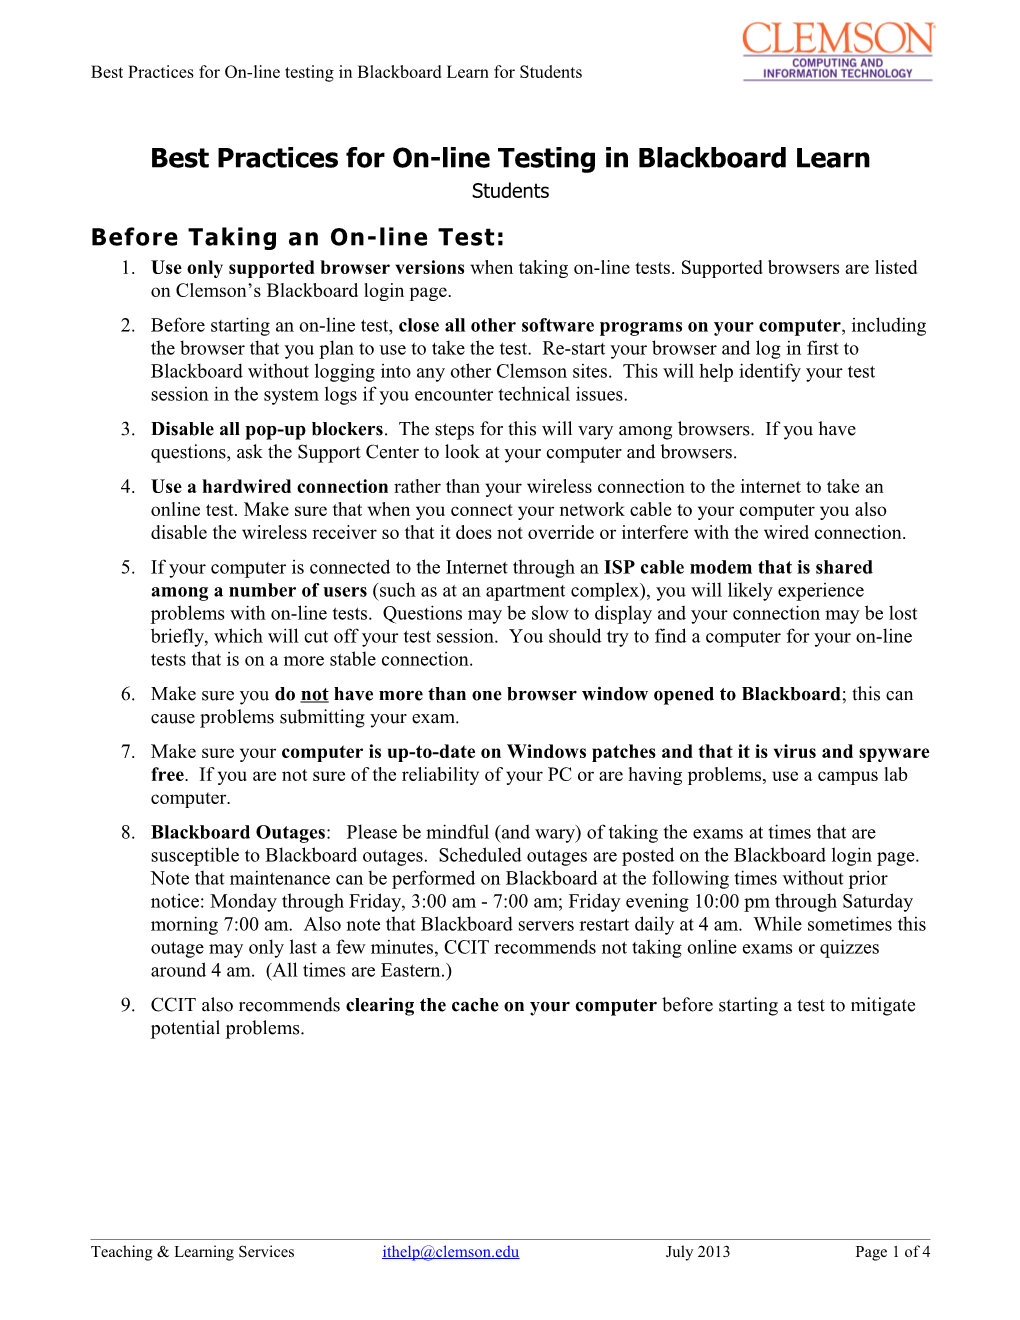 Best Practices for On-Line Testing in Blackboard Learn